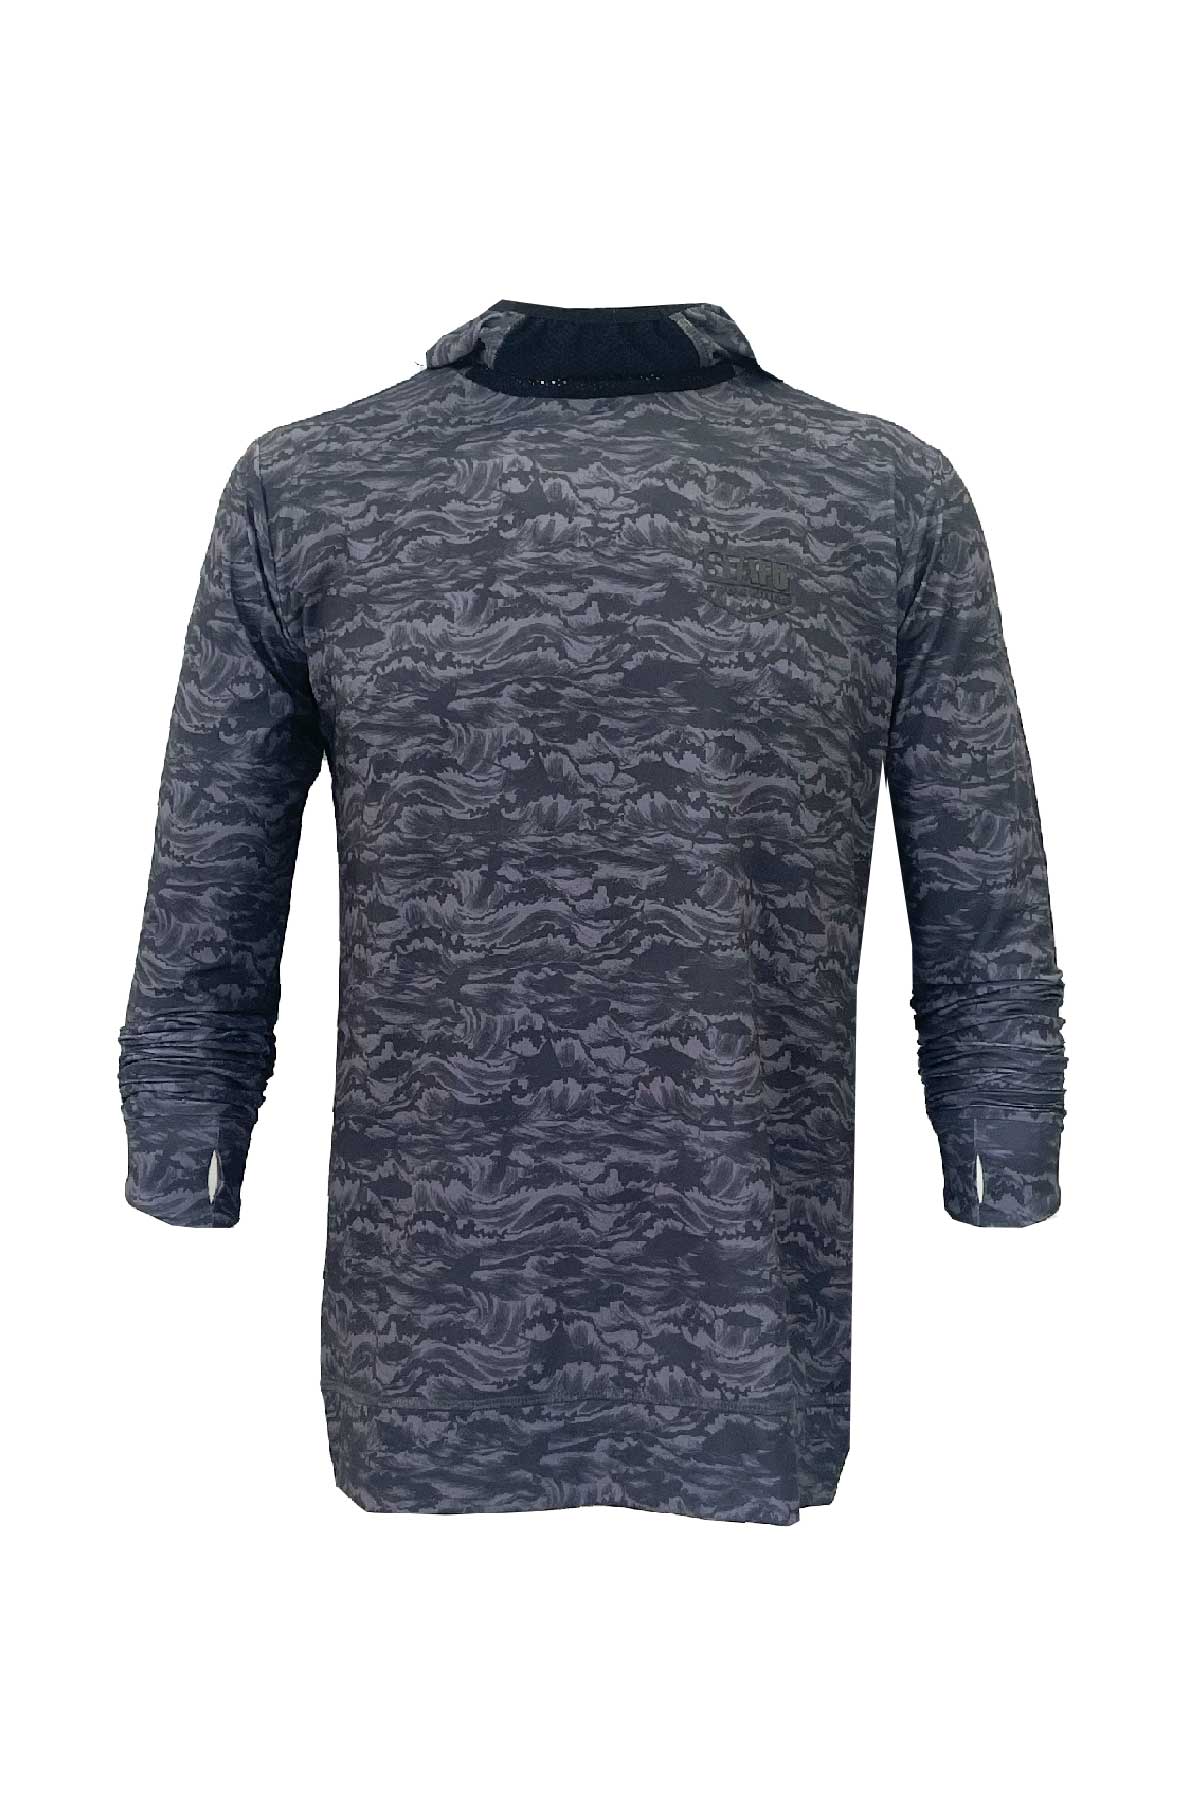 Haka Men's Hooded Long Sleeve Fisherman Sailor Signature Patterned Black UV Protected Shirt